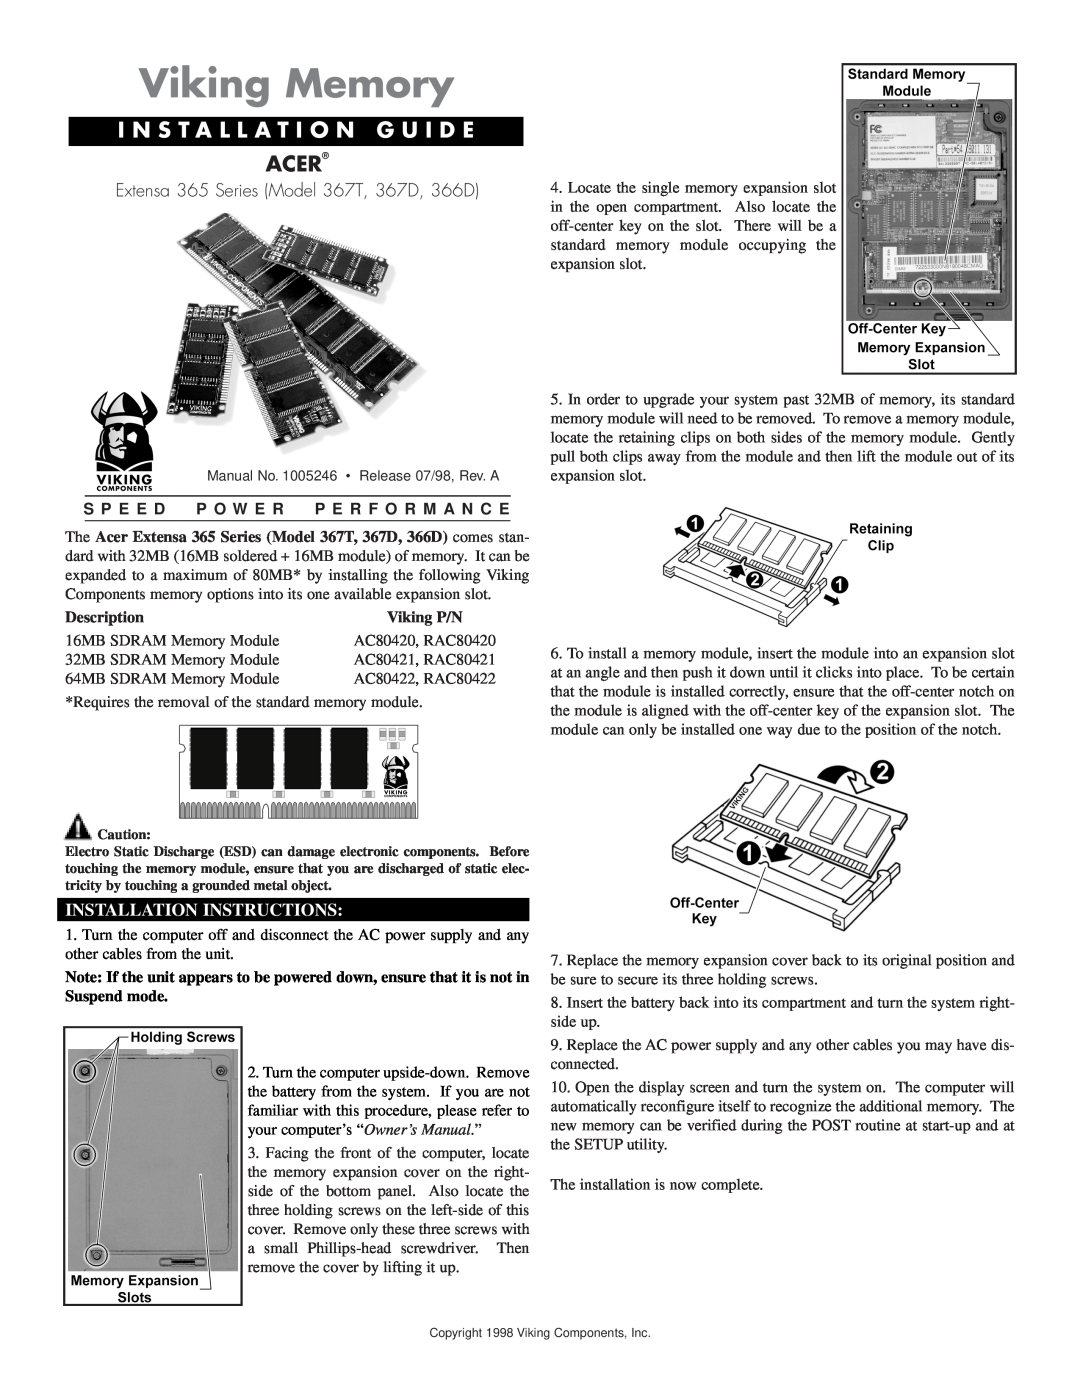 Viking 367D installation instructions Viking Memory, I N S T A L L A T I O N G U I D E, Acer, Installation Instructions 